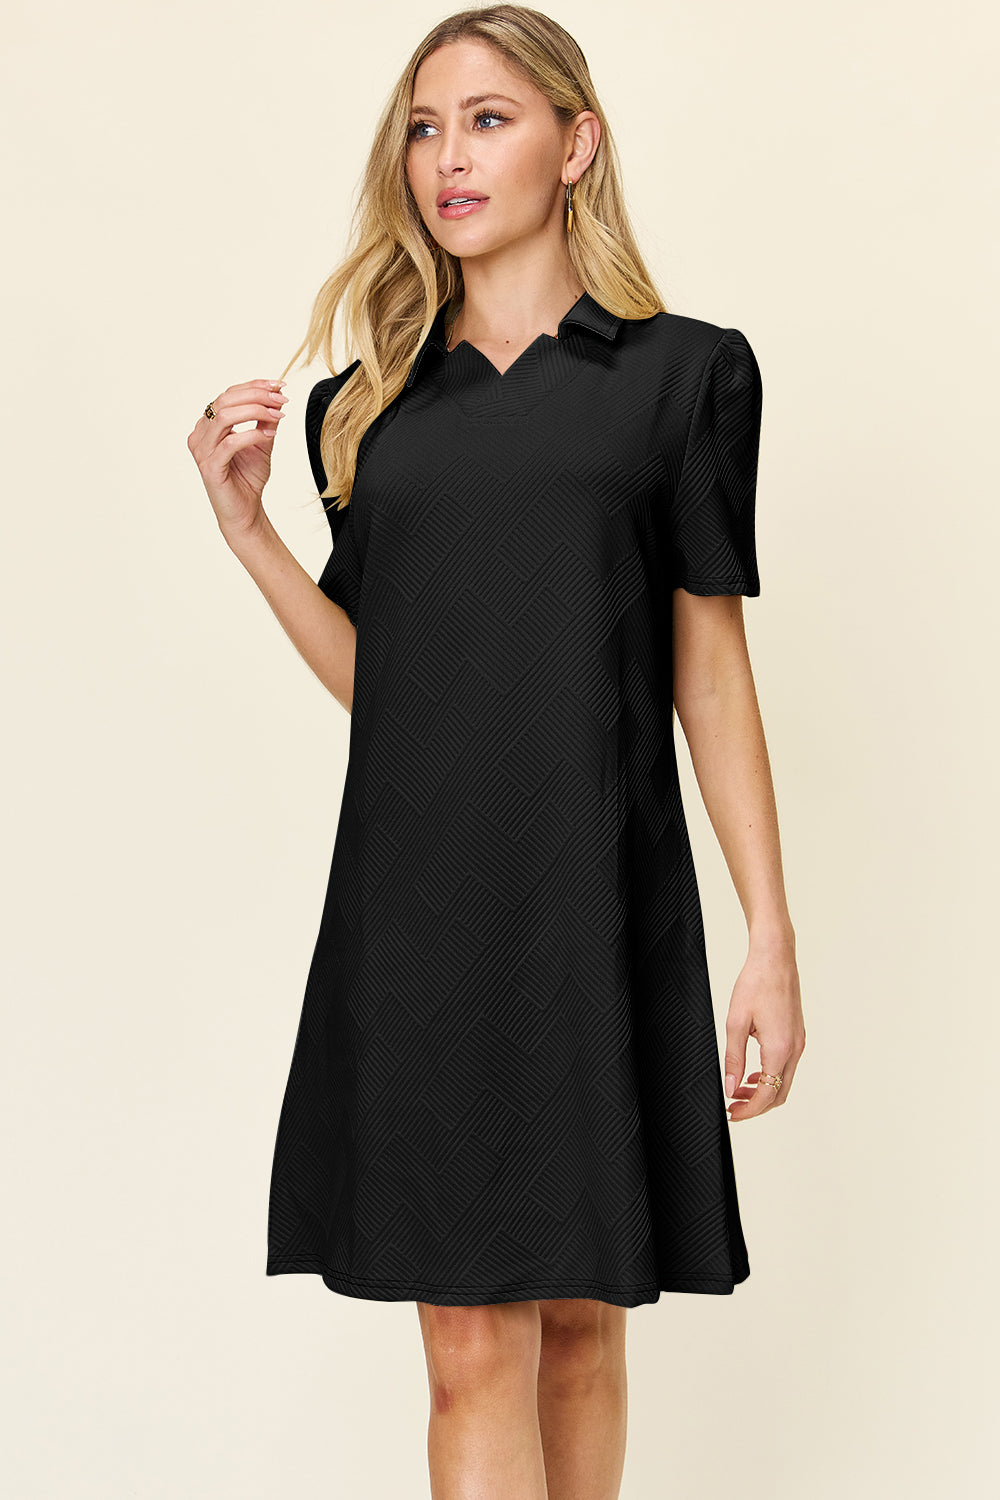 Textured Collared Short Sleeve Dress Black